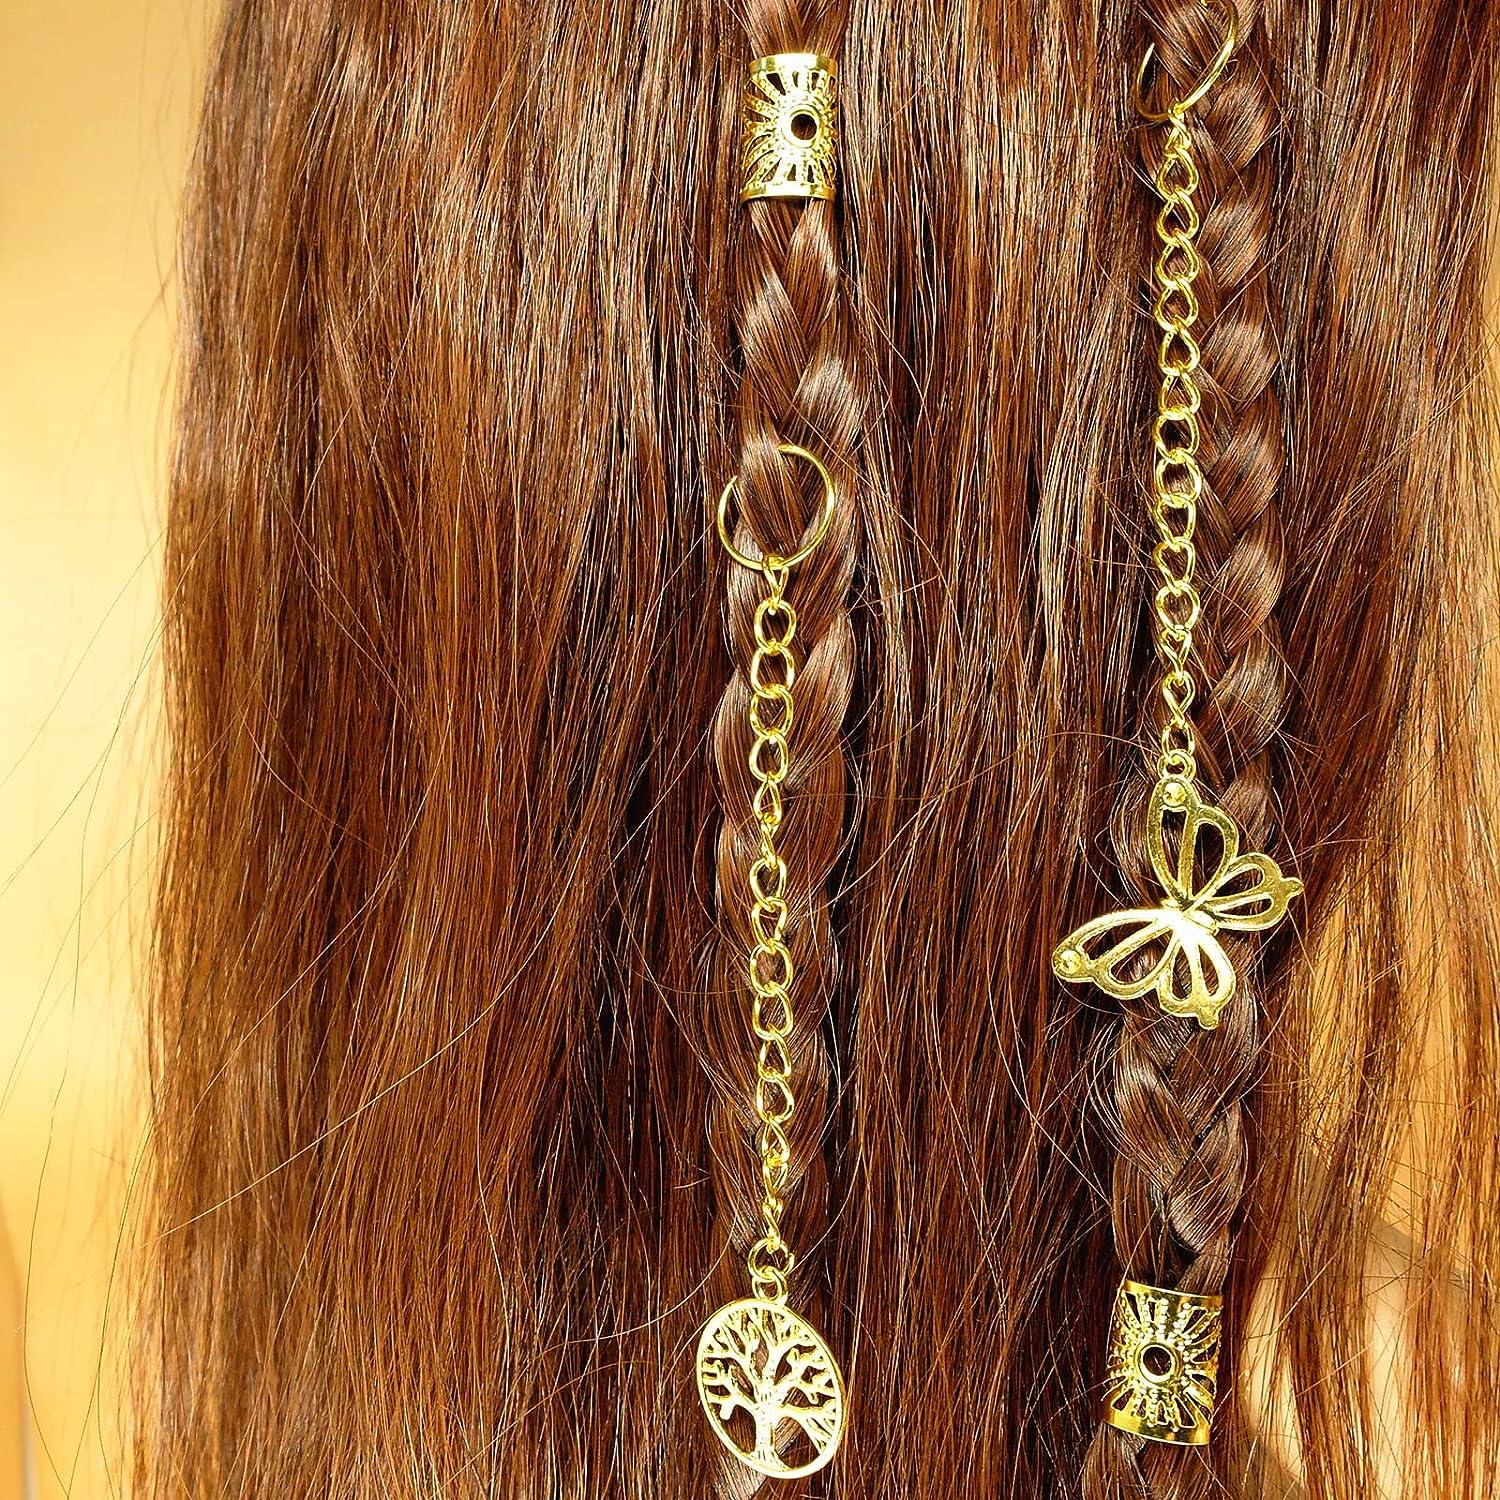 64 Pieces Dreadlocks Loc Hair Jewelry for Women Braids Hair